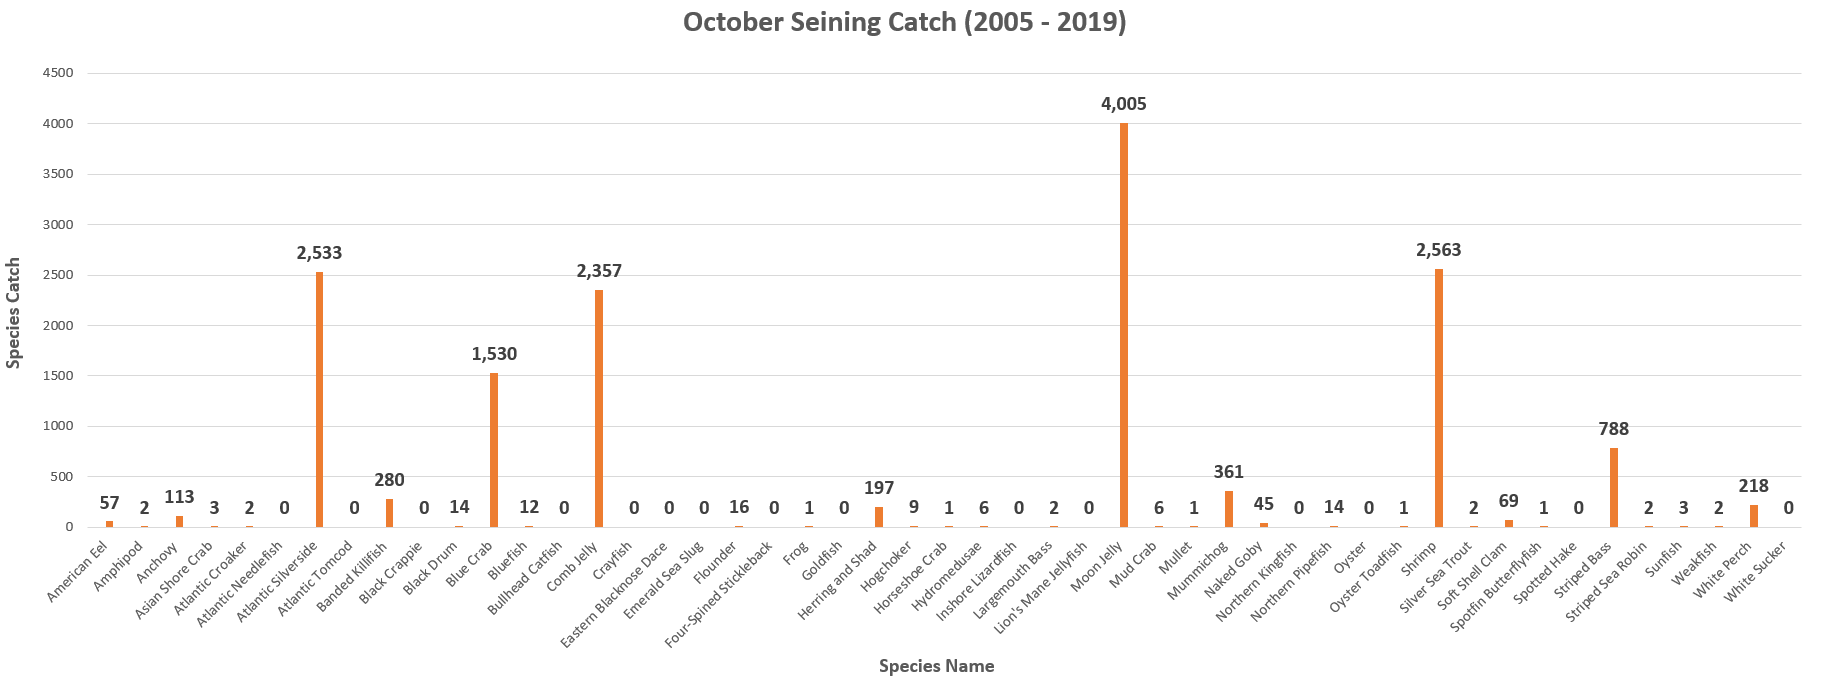 October Catch